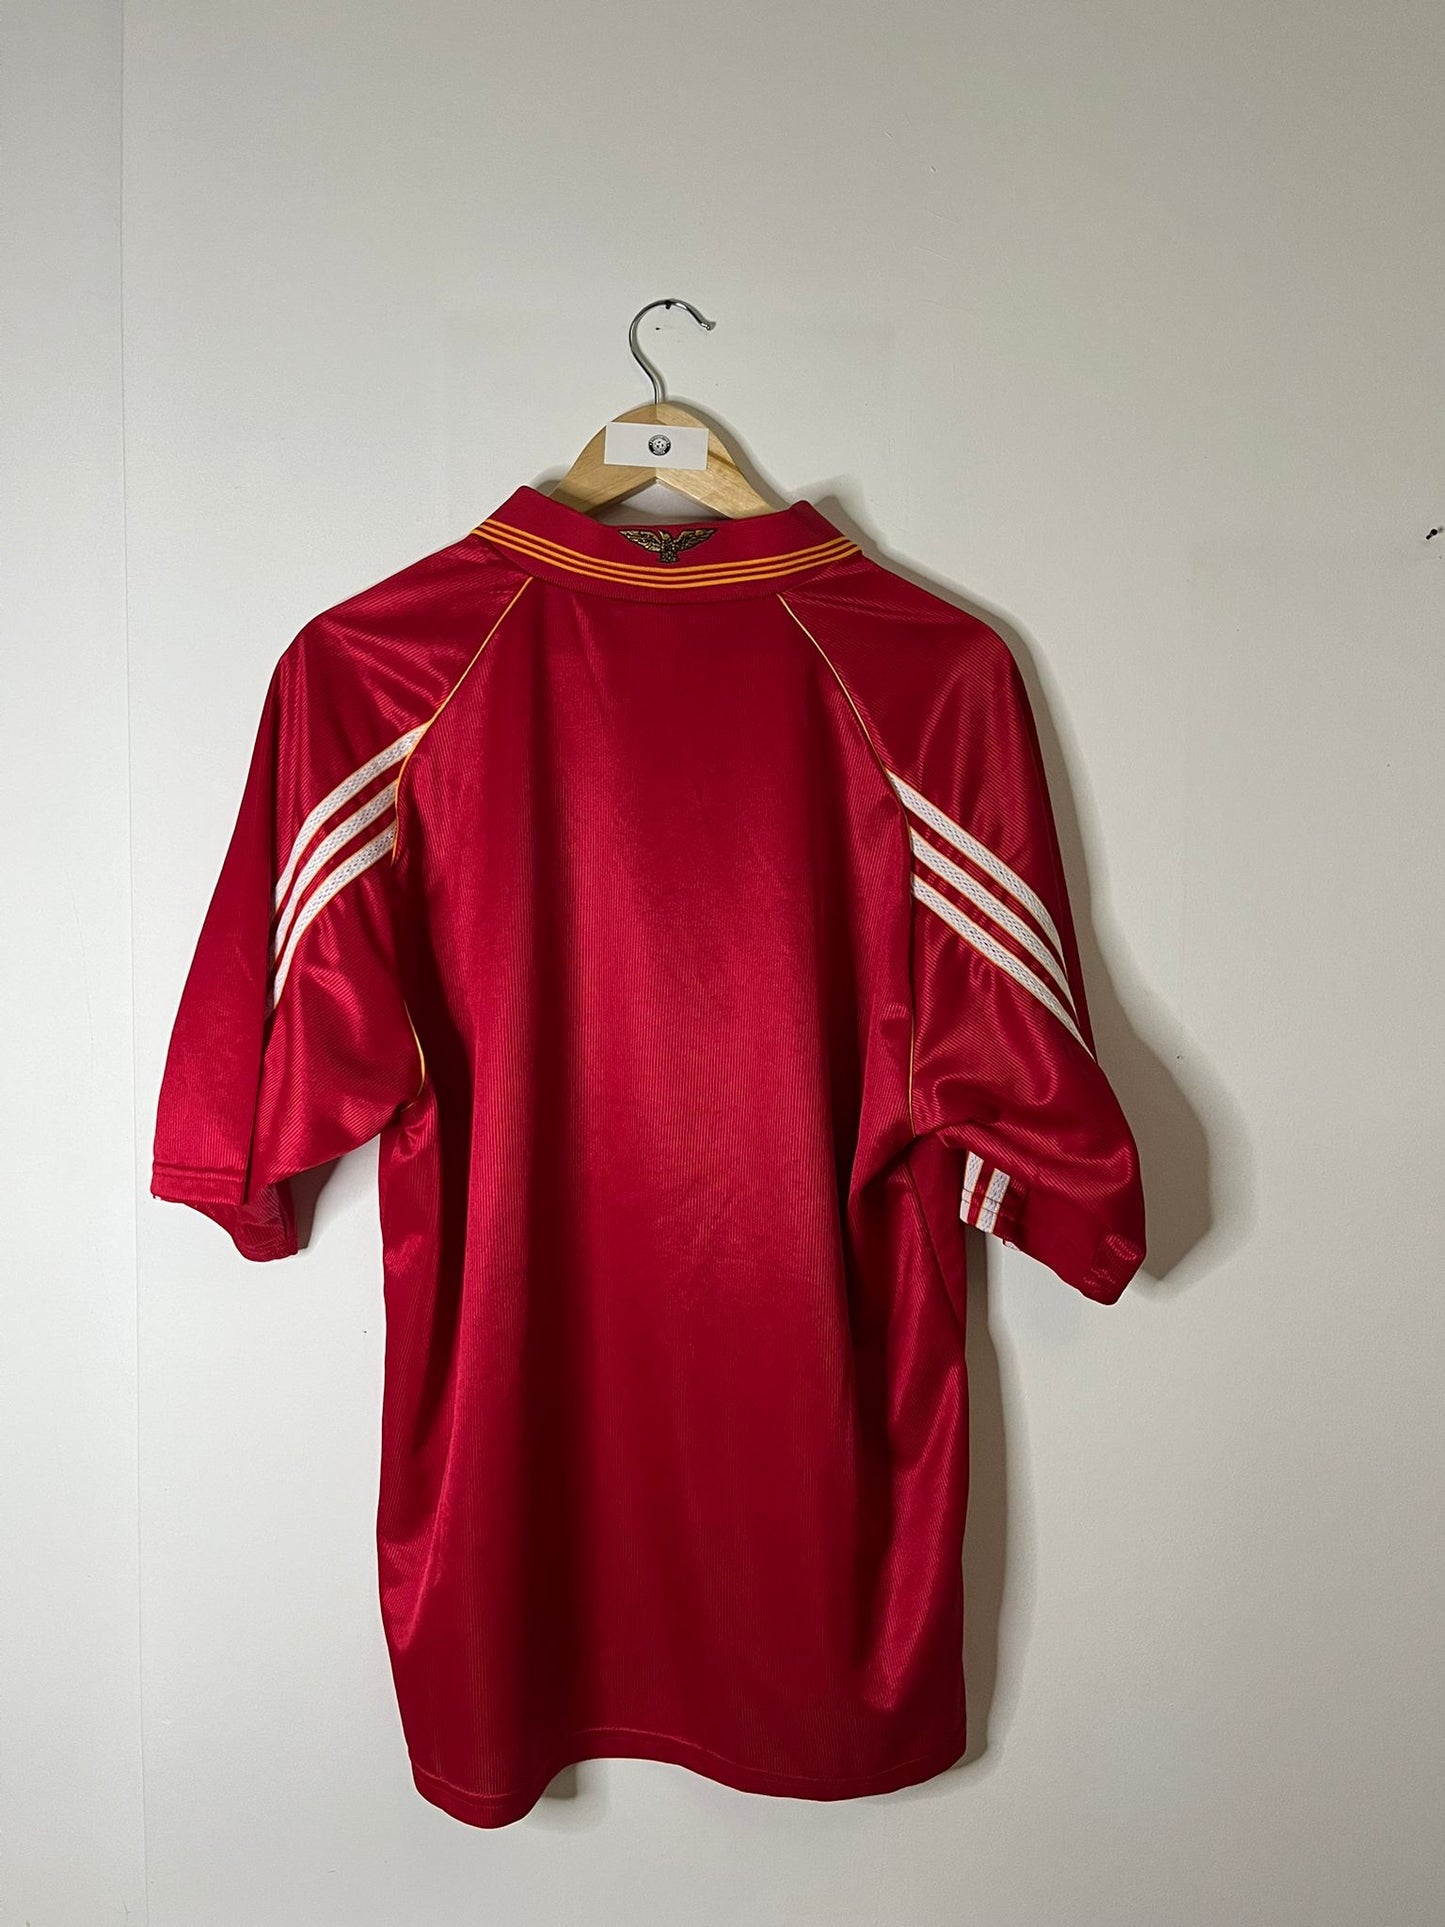 Benfica jersey retro